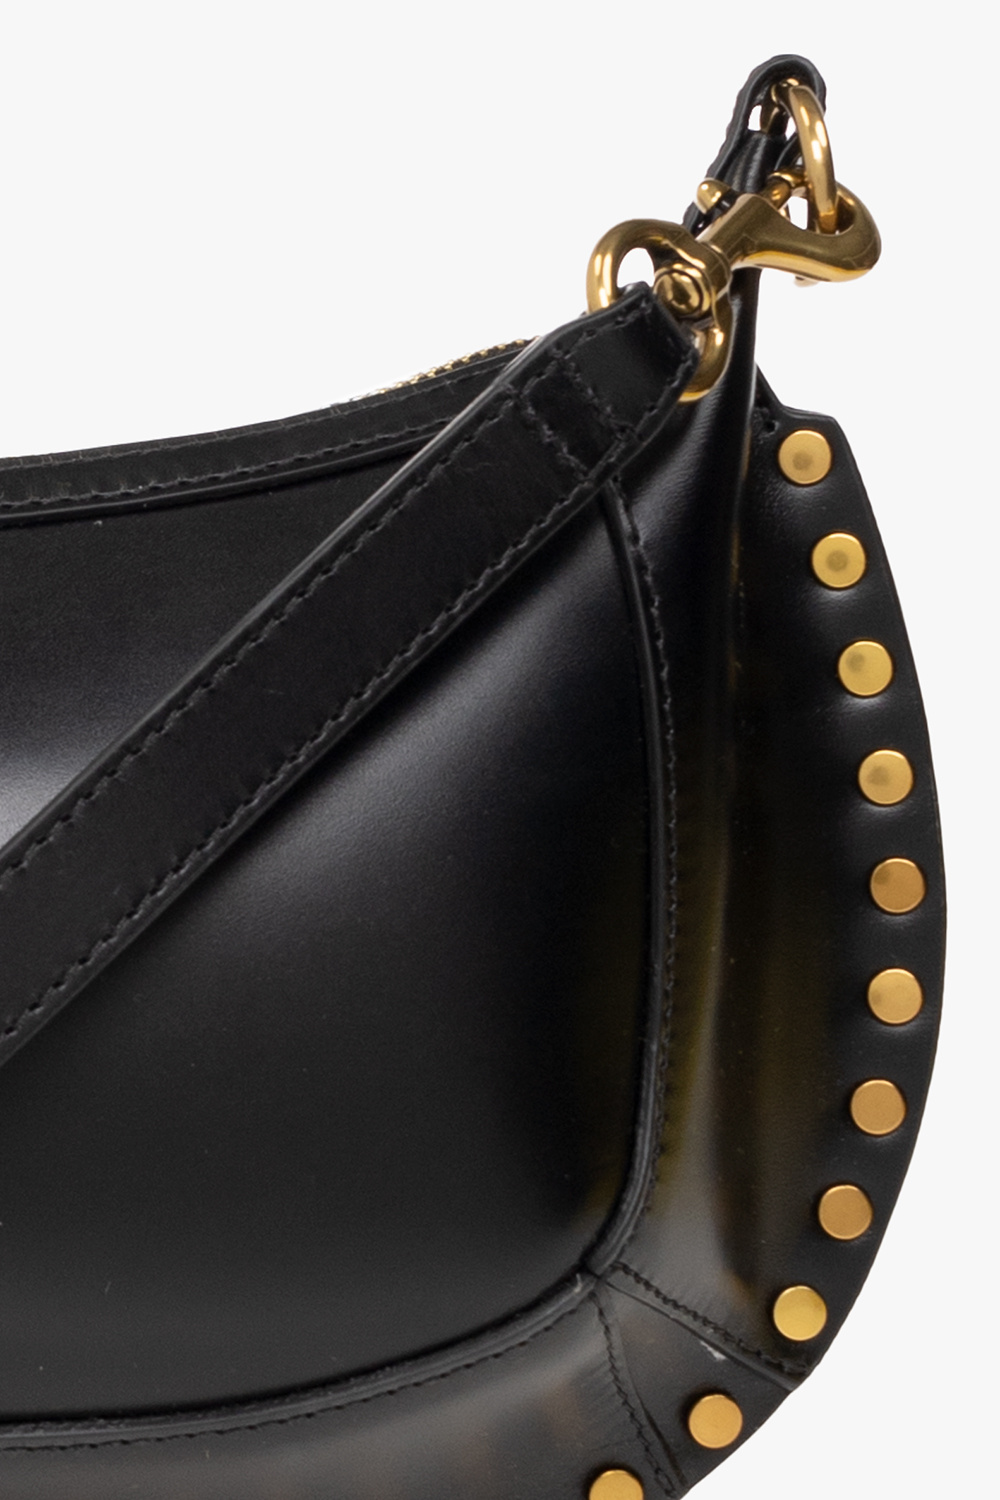 Isabel Marant Women's Black Asli Suede and Leather Crossbody bag